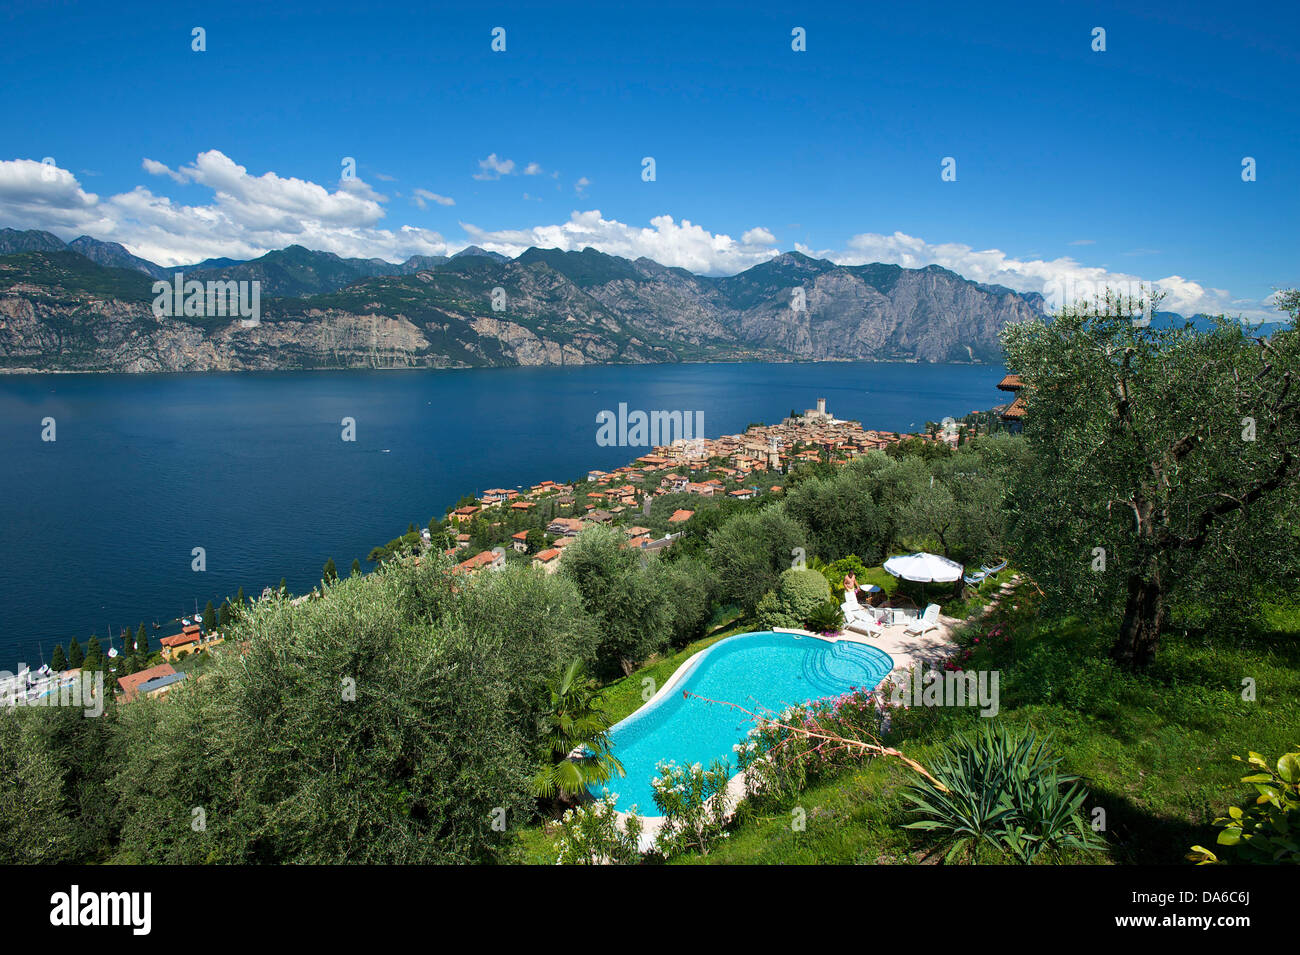 Lake Garda, Italy, Europe, Lago di Garda, Malcesine, town view, hotel pool, pool arrangement, pool, hotel, tourism, Swimming poo Stock Photo